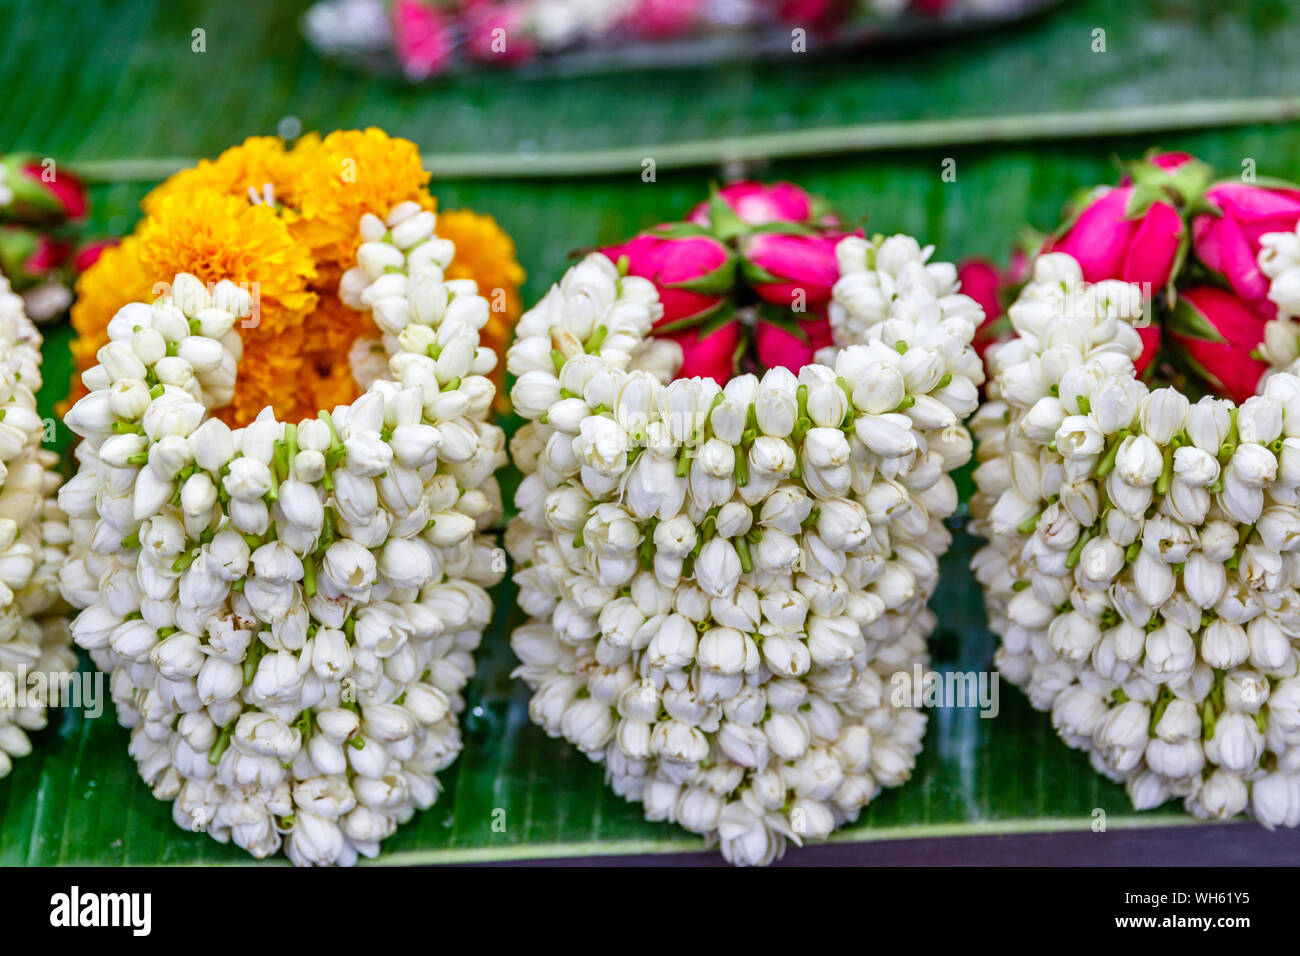 Varie jasmine Phuang malai, tailandese tradizionale ghirlanda di fiori offerte a Pak Khlong Talat, Bangkok il mercato dei fiori. Thailandia. Foto Stock